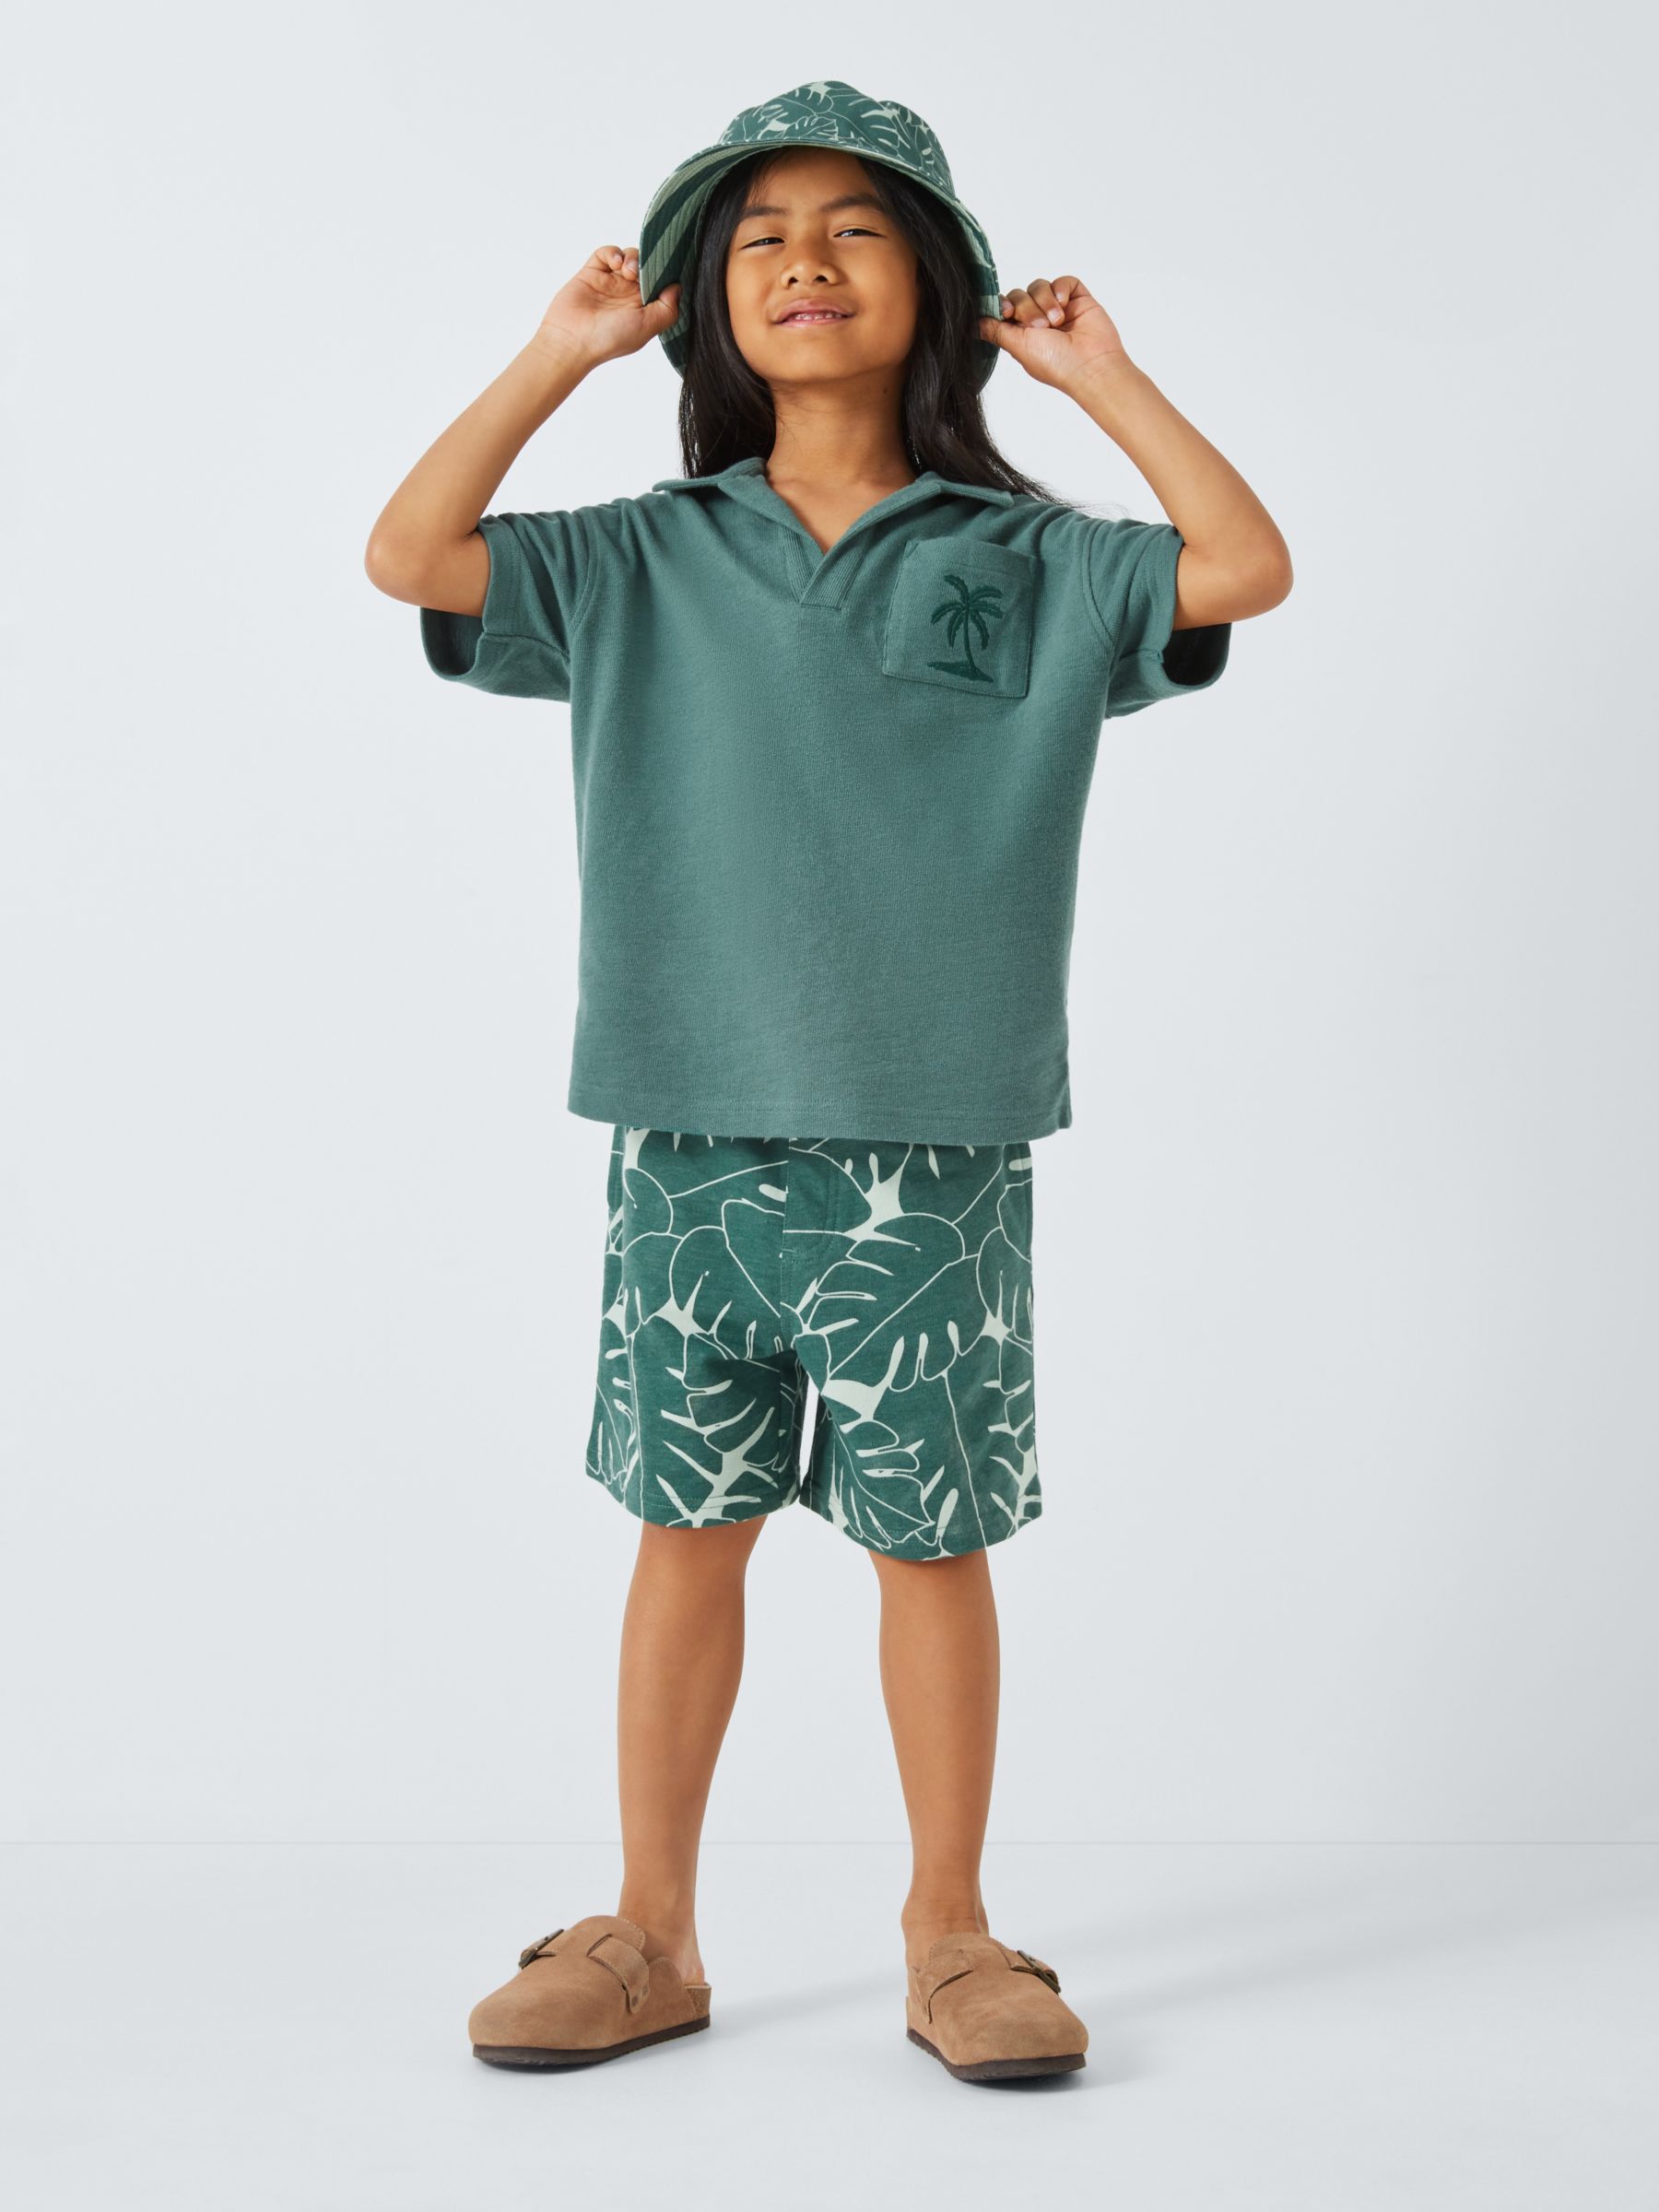 John Lewis Kids' Palm Leaf Print Jersey Shorts, Green, 10 years